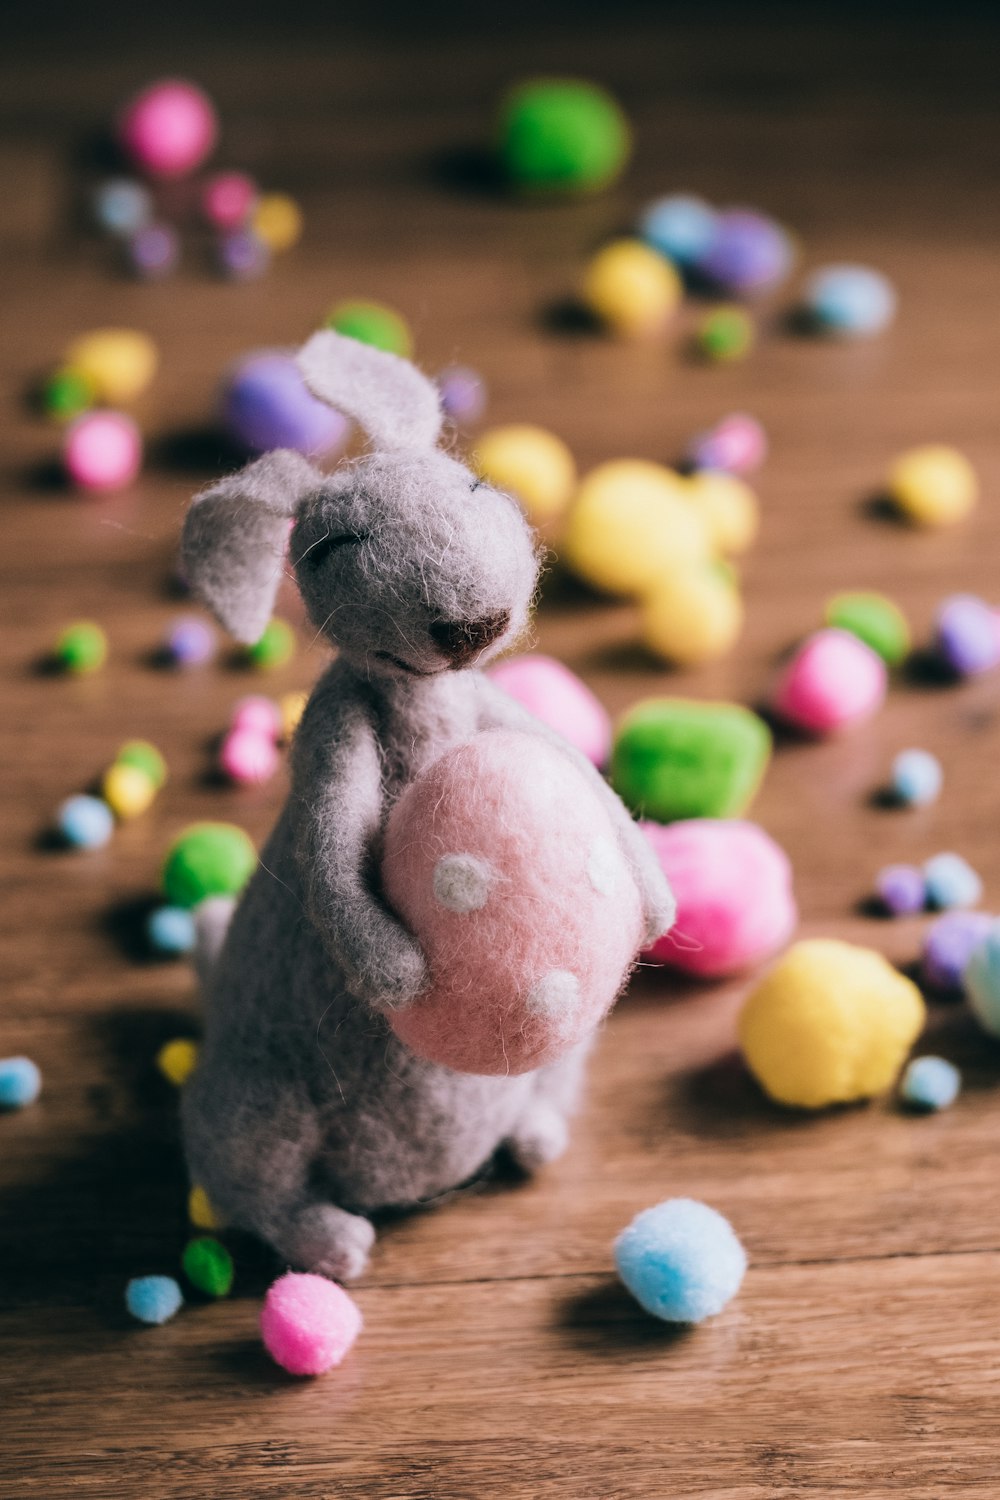 Foto de primer plano del juguete de peluche del conejo gris